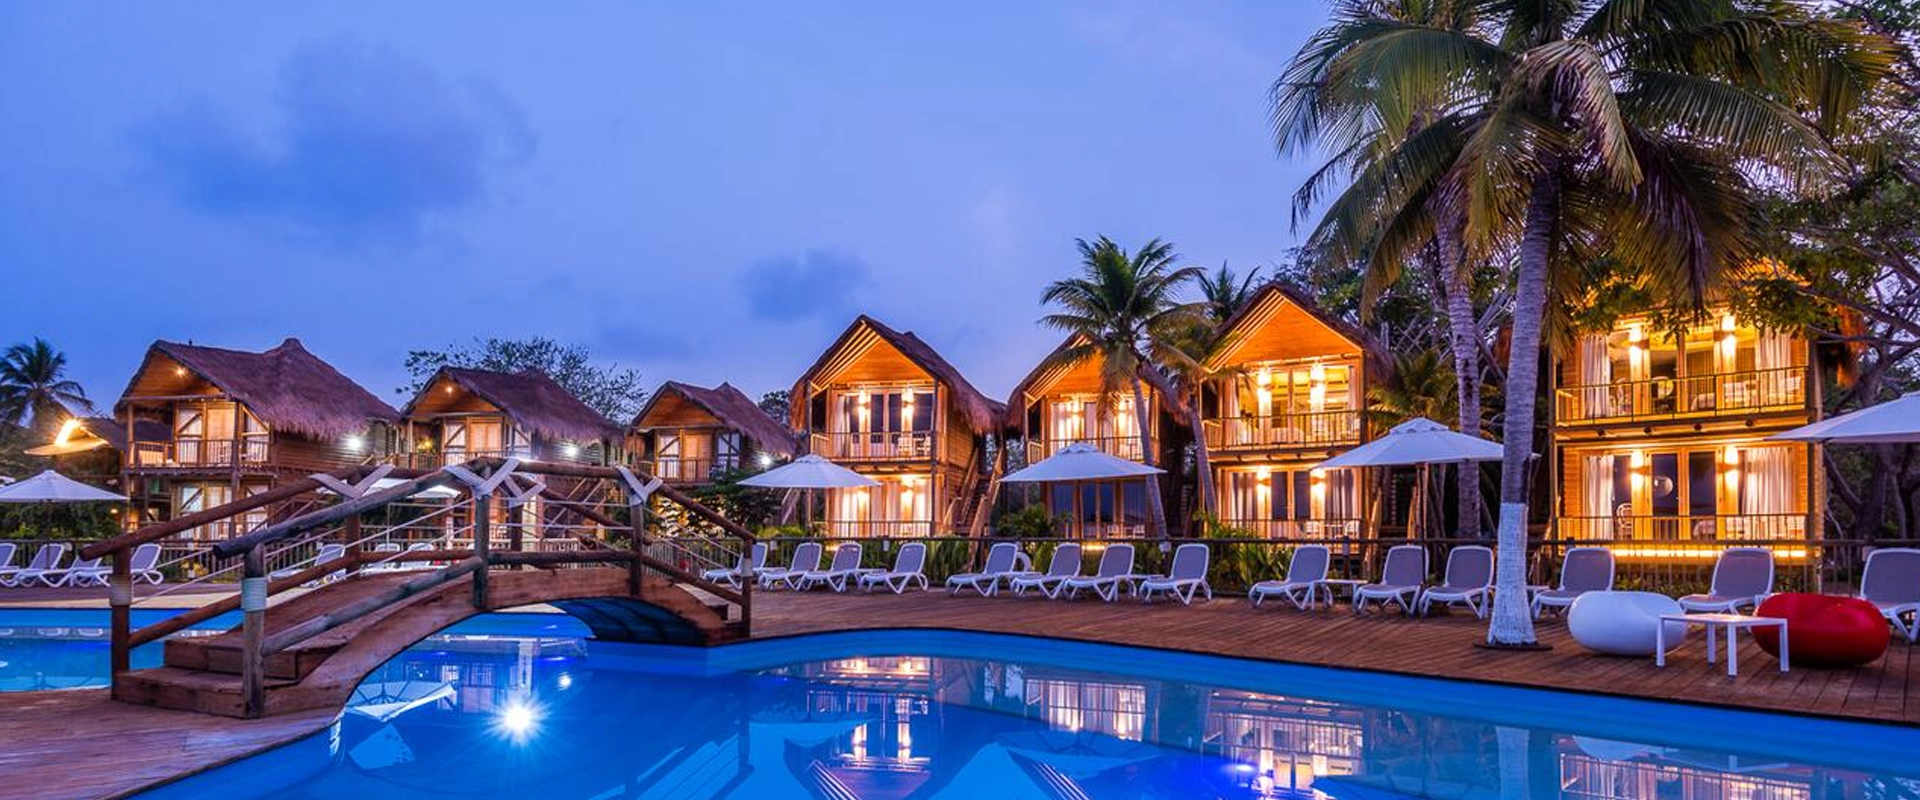 incontournable colombie hotel isla del encanta piscine